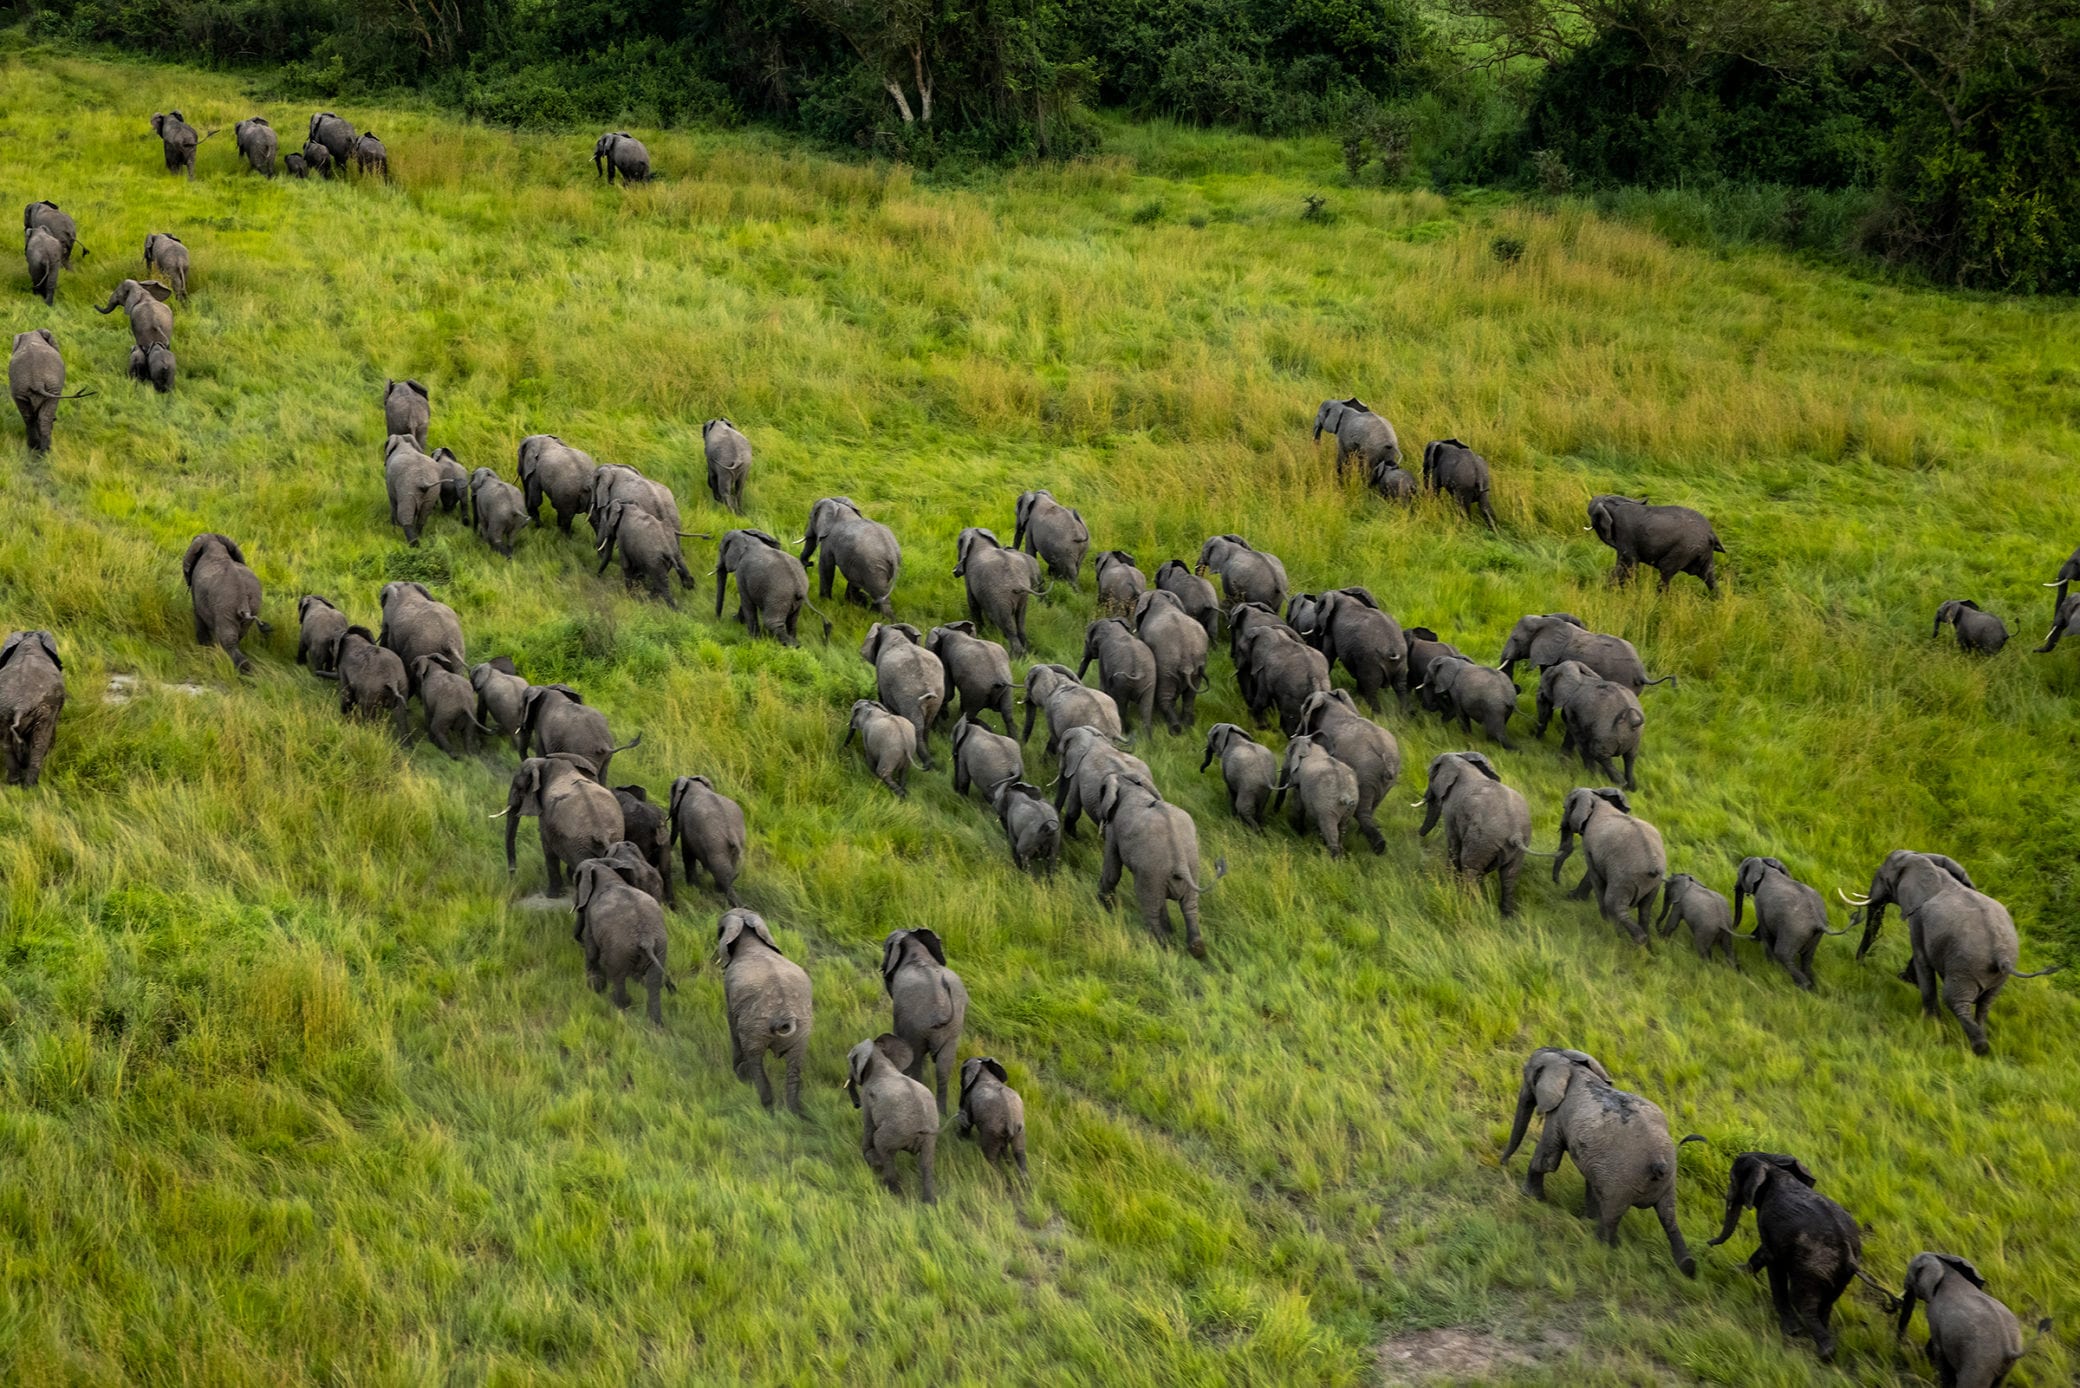 A herd of elephants crossing the savanna taken by photographer Brent Stirton